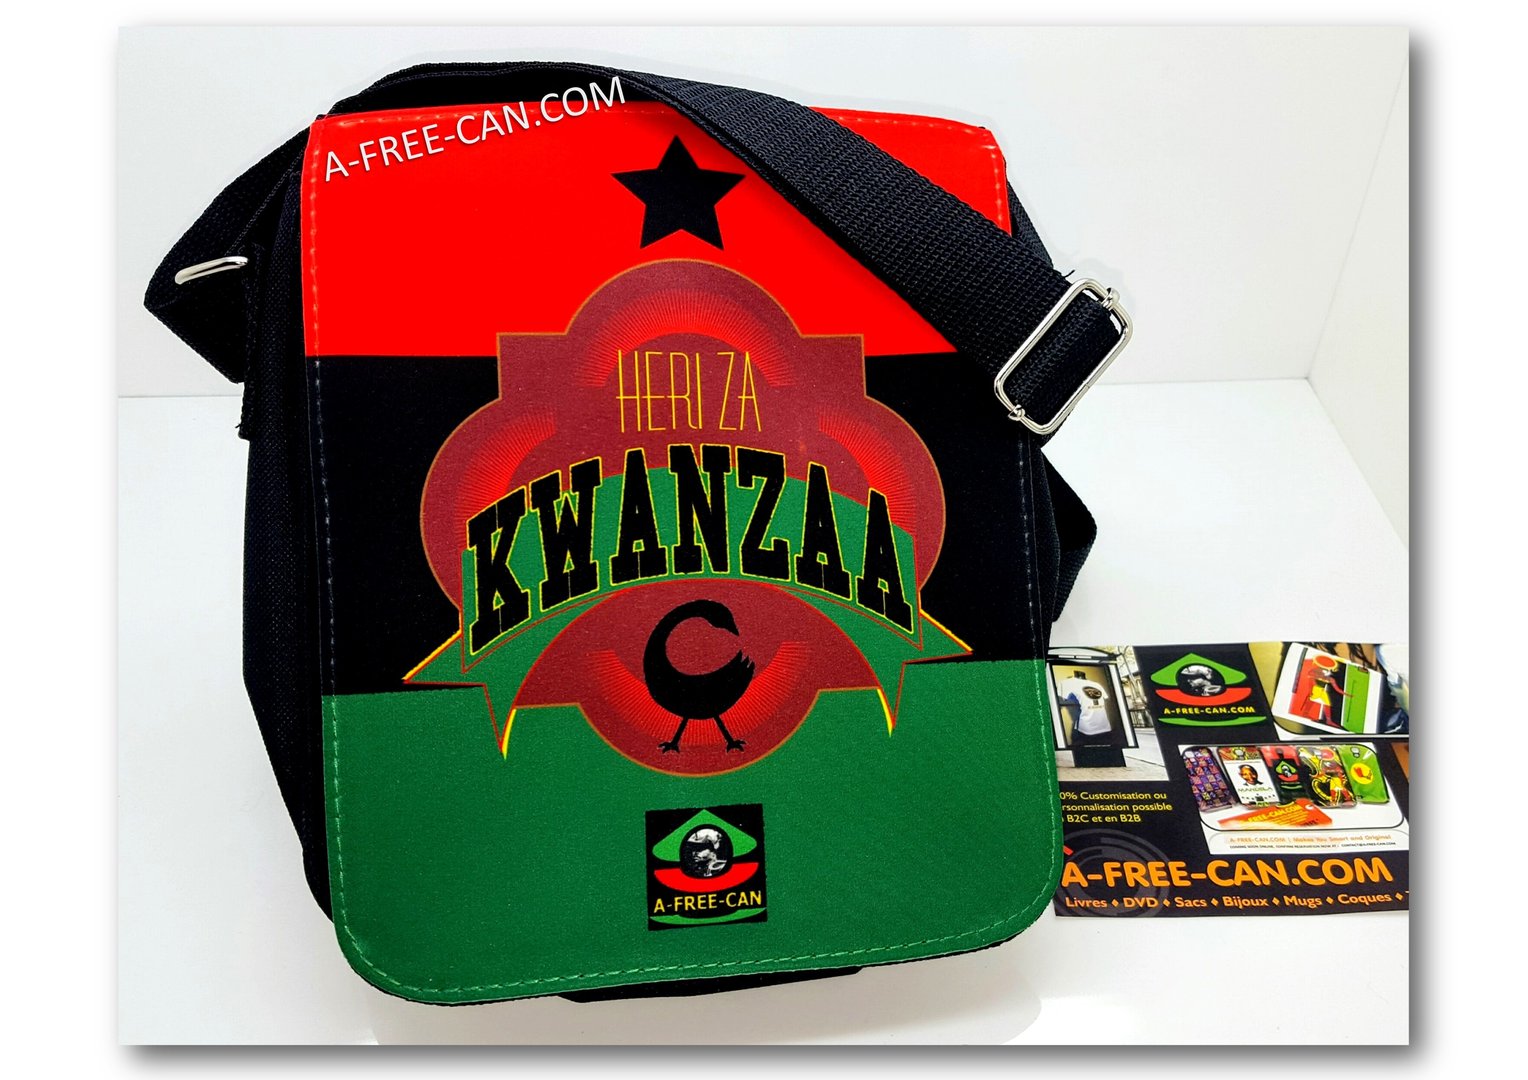 Petit Sac / Small Bag: "HERI ZA KWANZAA" by A-FREE-CAN